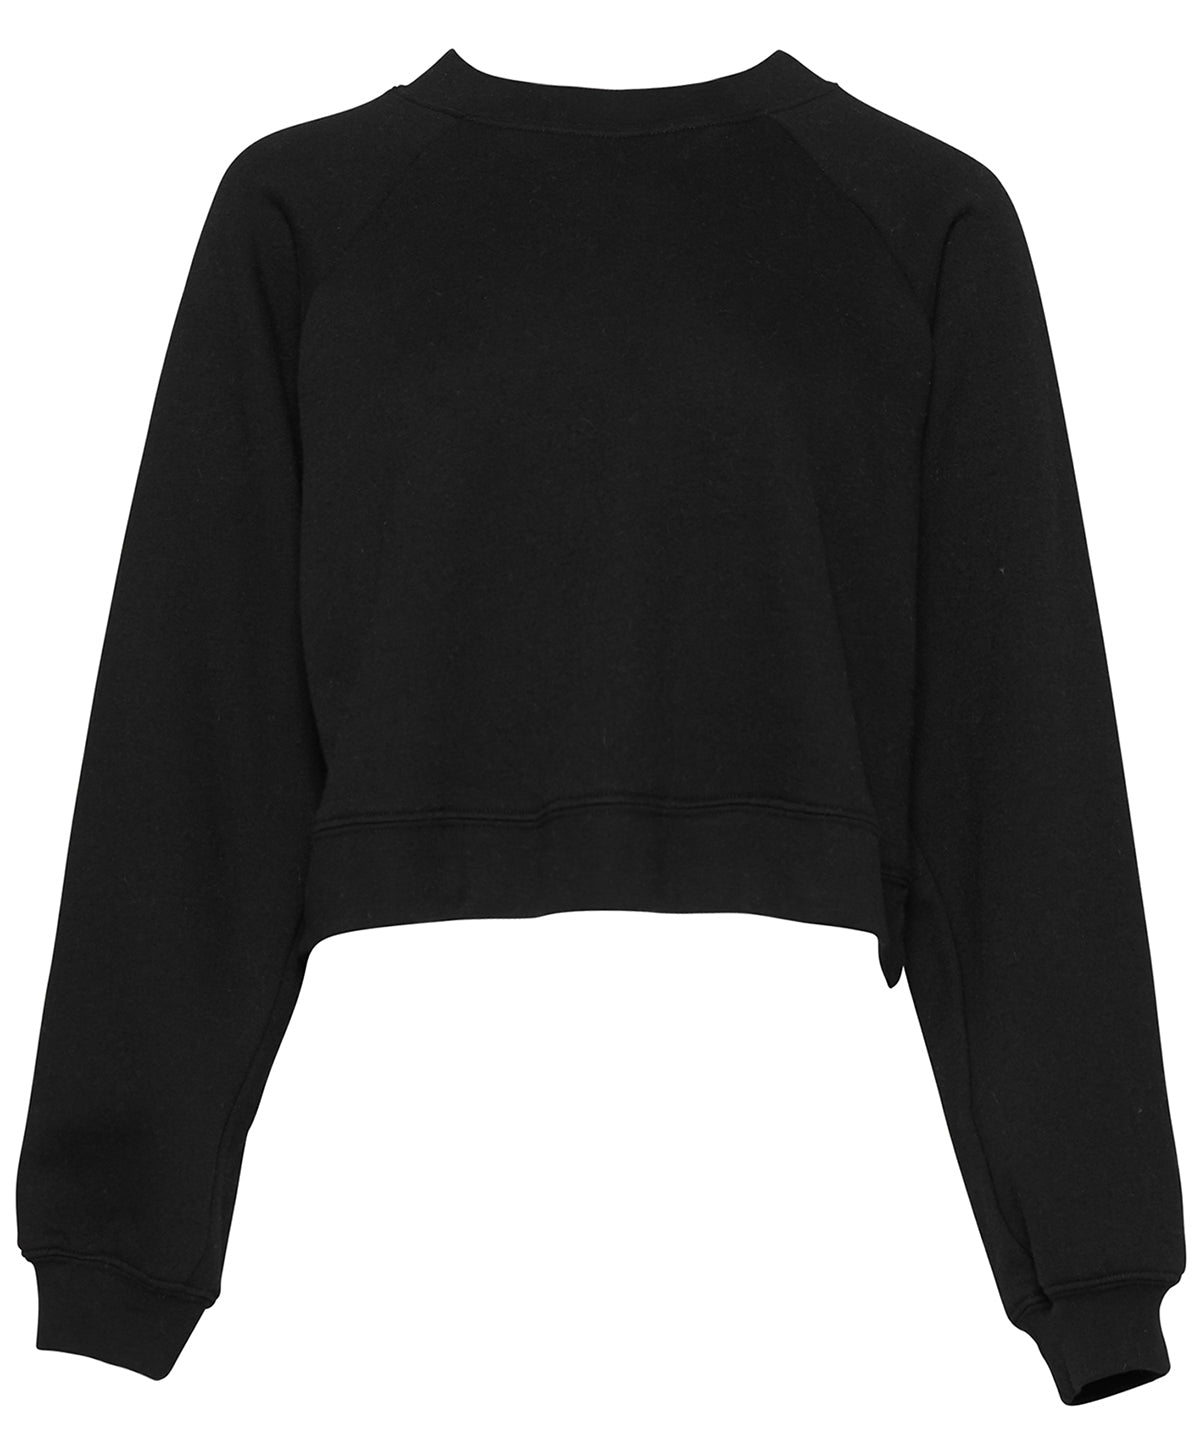 Women's raglan pullover fleece | Black